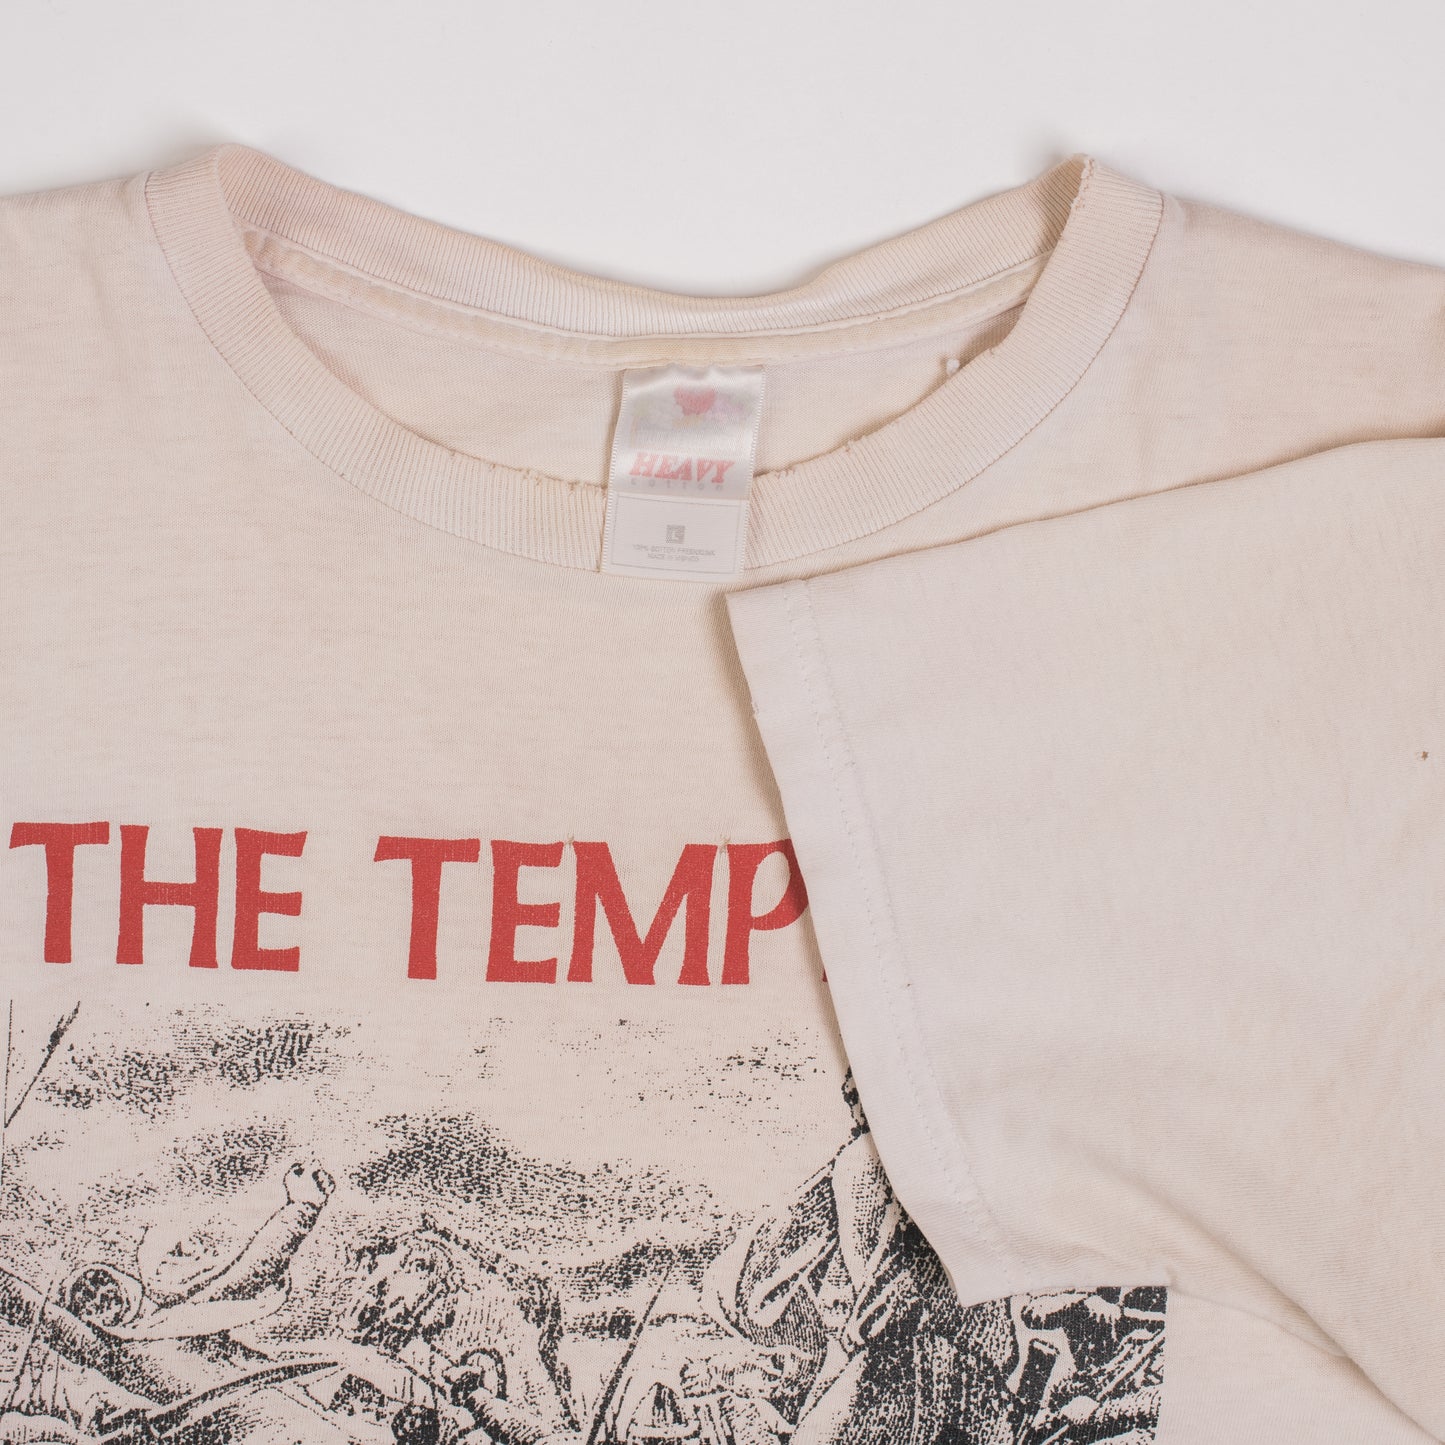 Vintage 1998 The Templars 1118-1312 T-Shirt